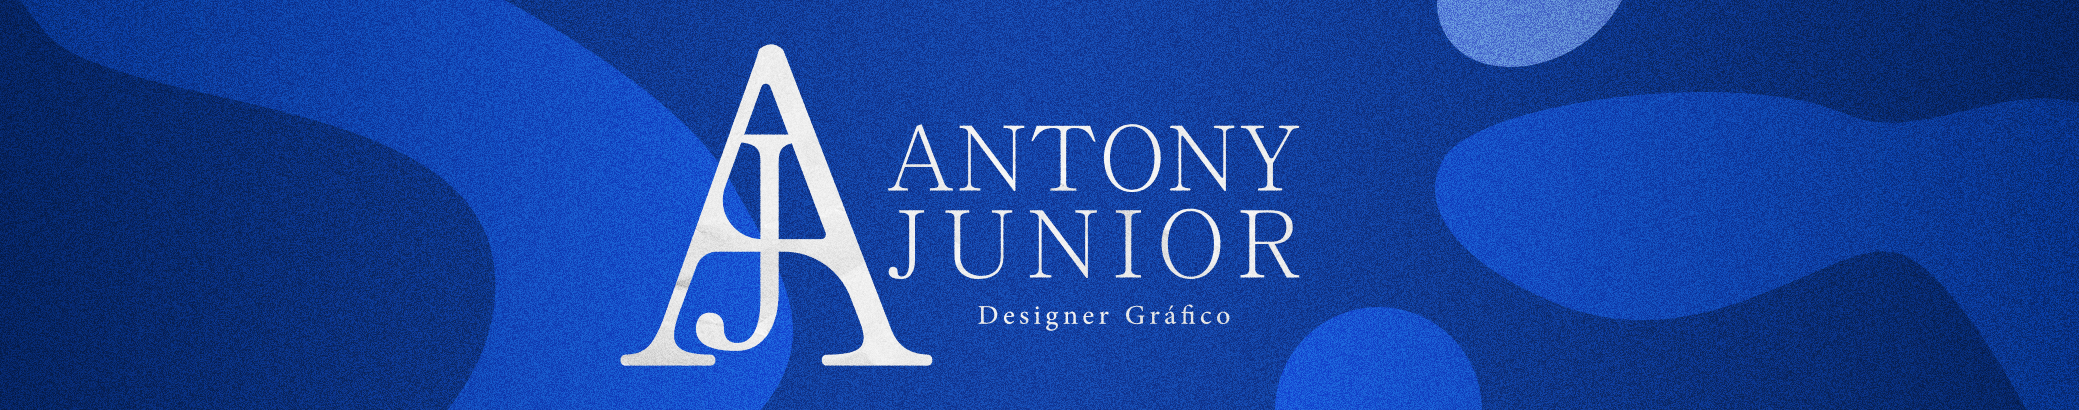 Profil-Banner von Antony Junior